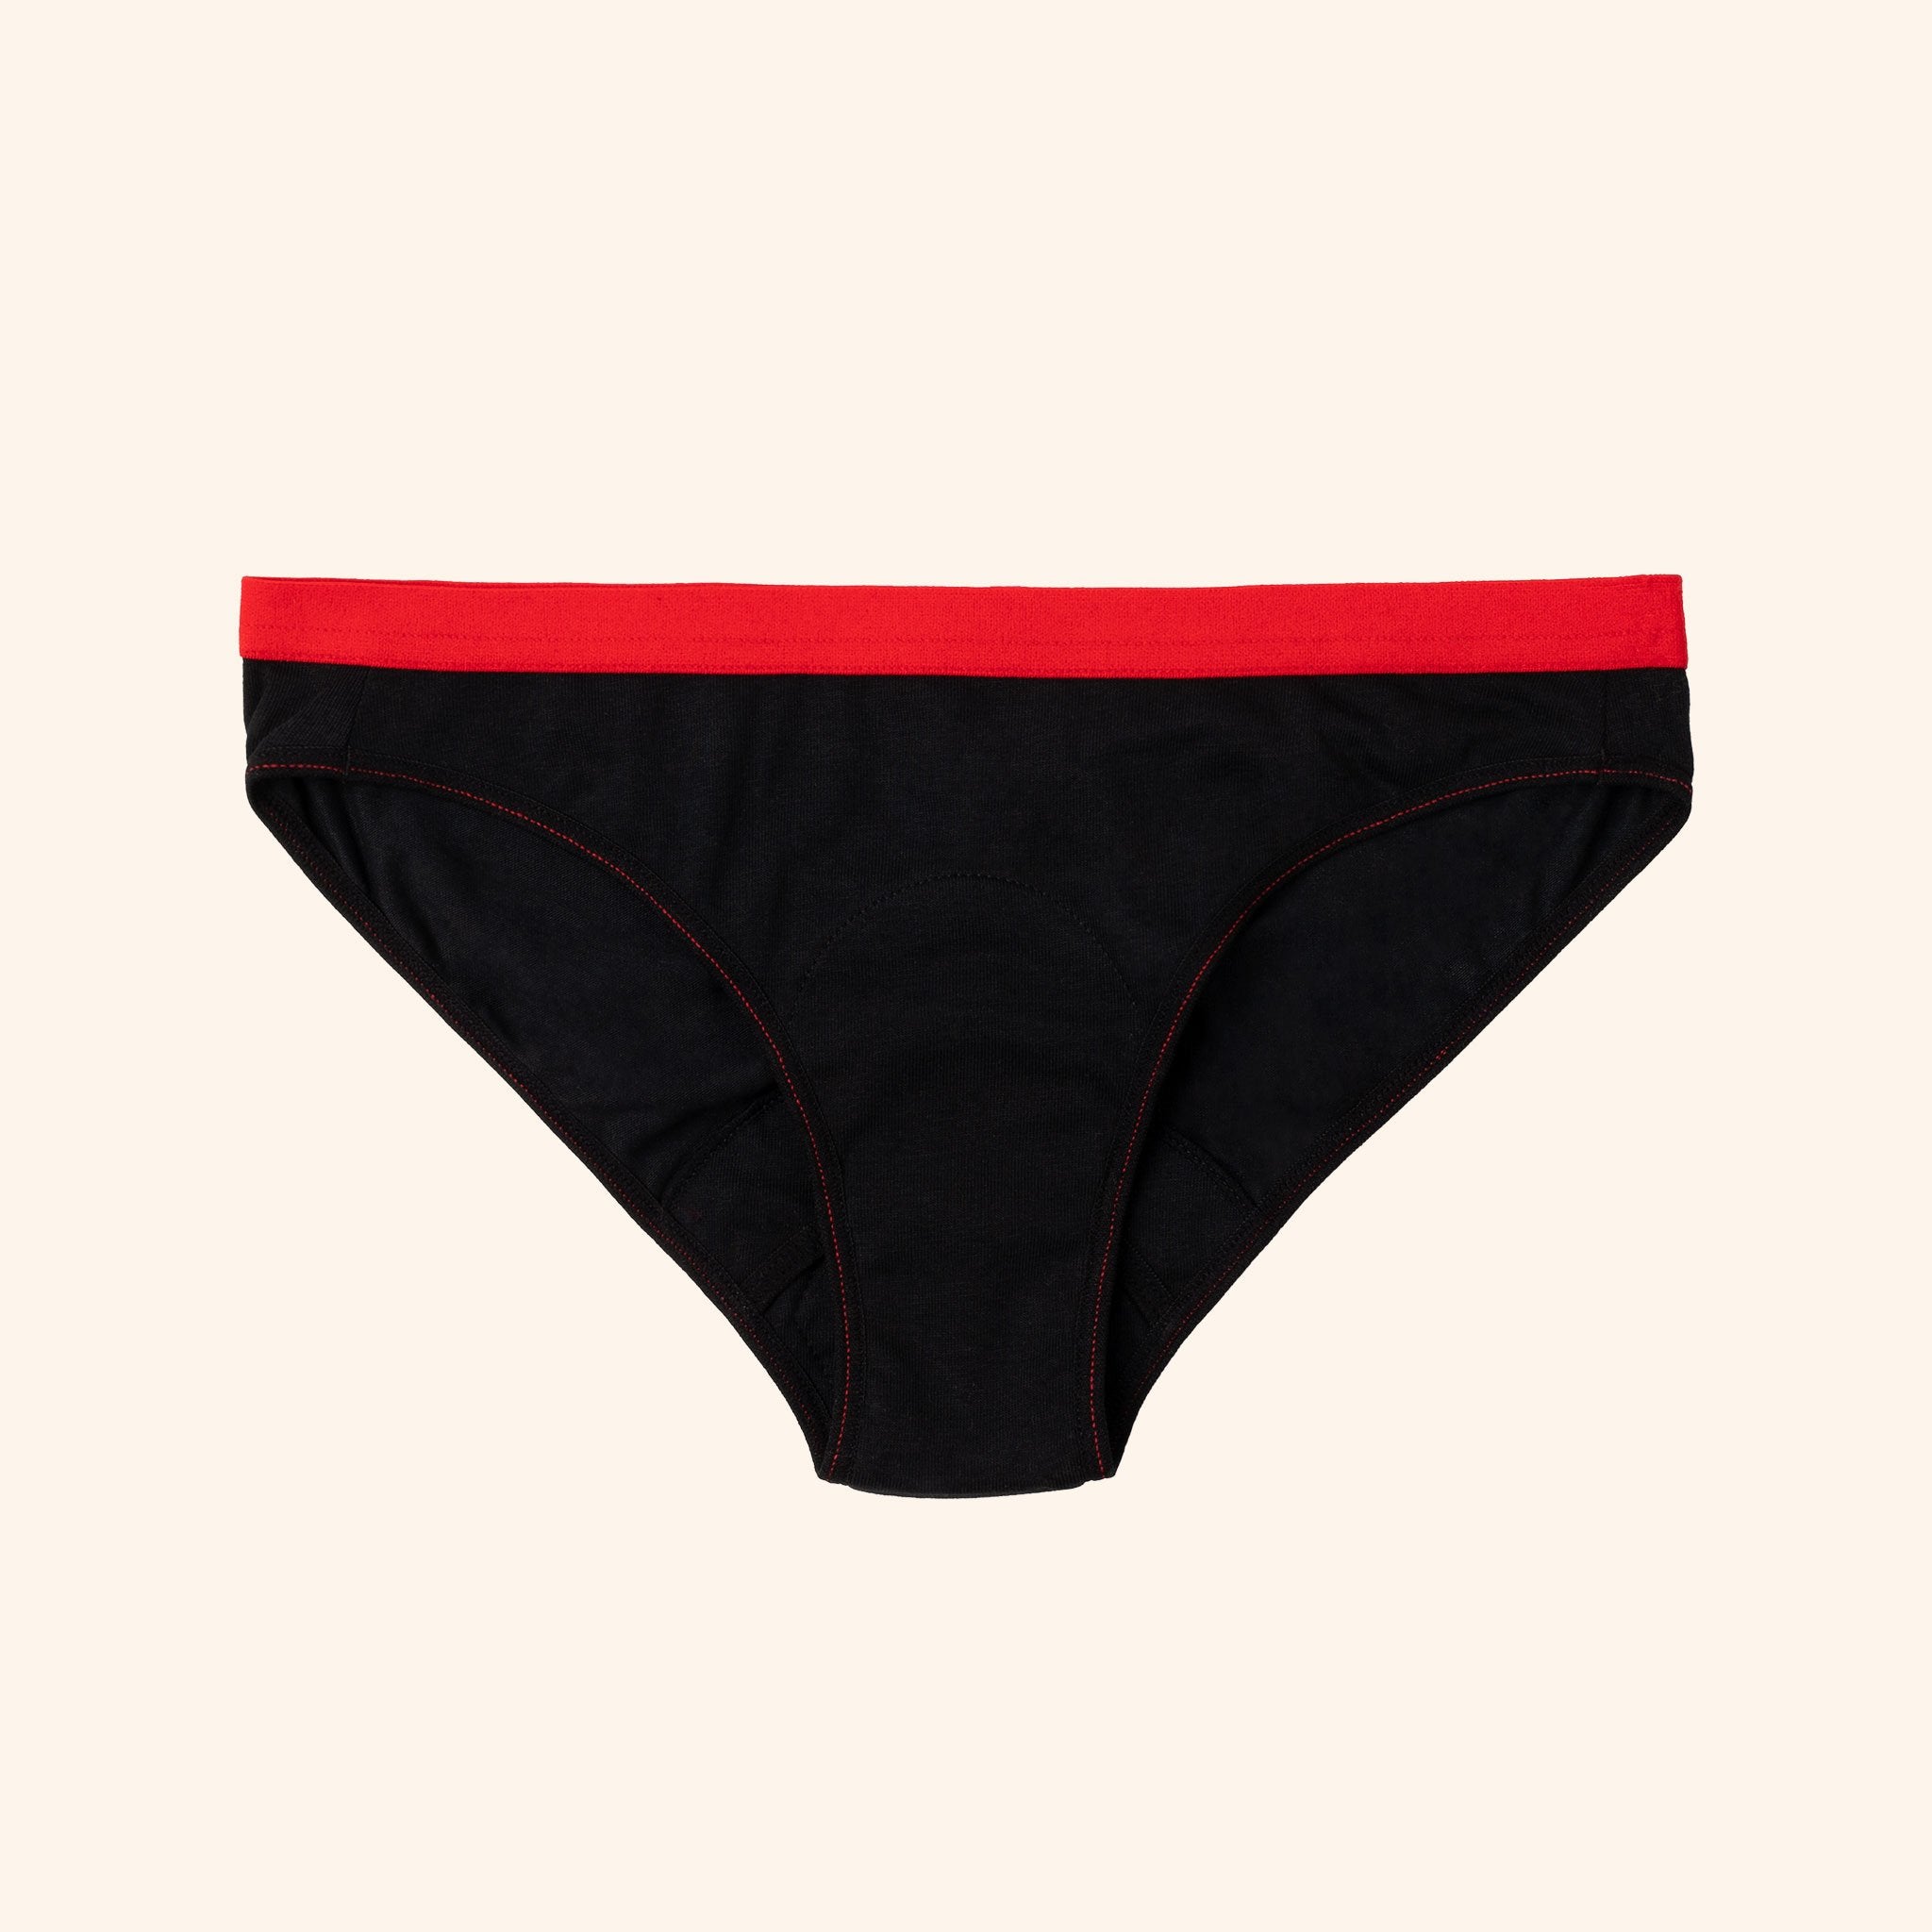 Period Underwear - Mme L'Ovary Le Bikini – Prettycleanshop